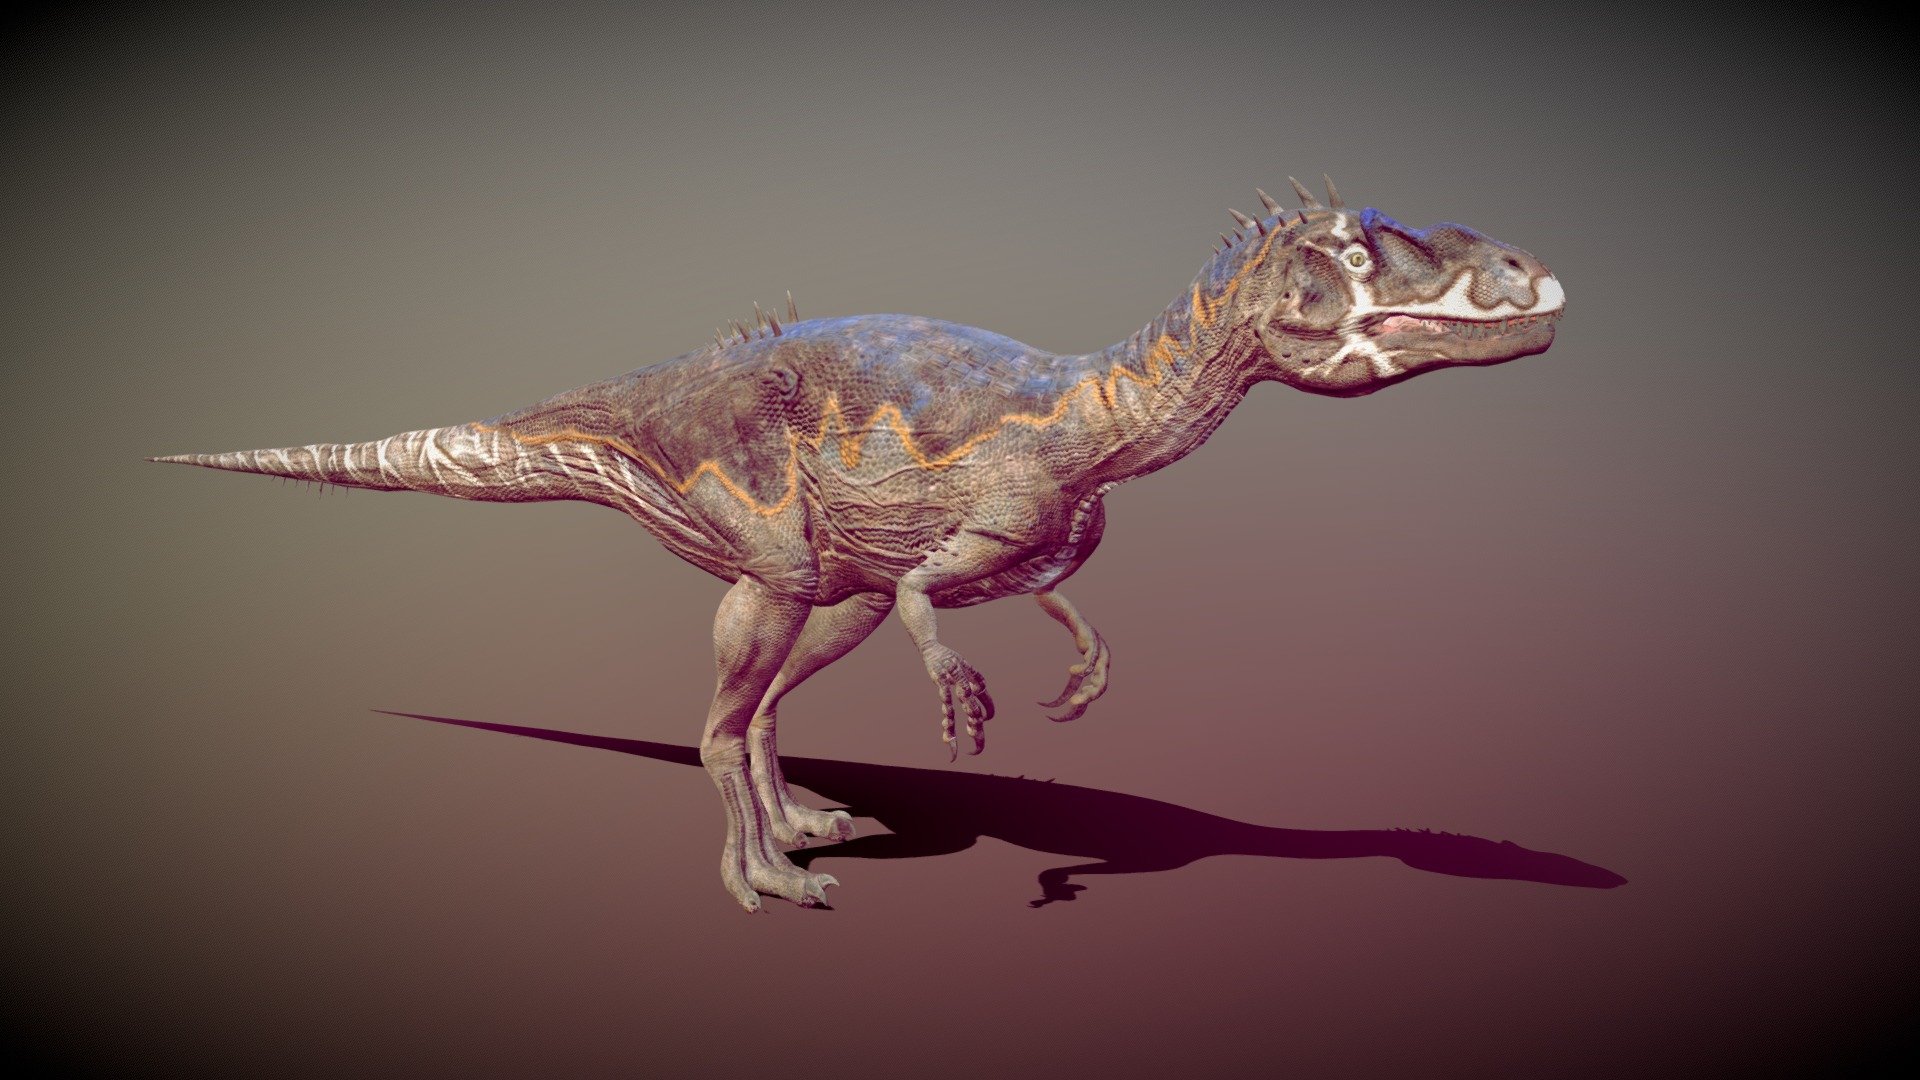 Allosaurus animation ver. 2016 by. VI models - Allosaurus animation ver. 2016 by. VI models - 3D model by Vitamin_imagination co., ltd. (CEO: Jin-kyeom Kim) (@kongtrex87) 3d model